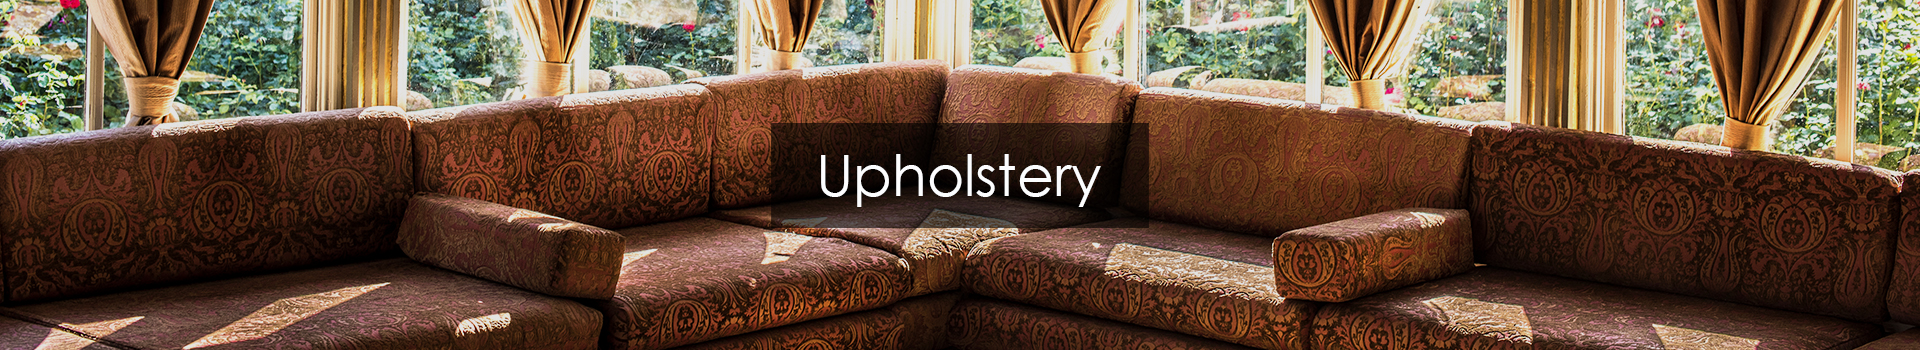 Upholstery Fabrics in Dubai & Abu Dhabi